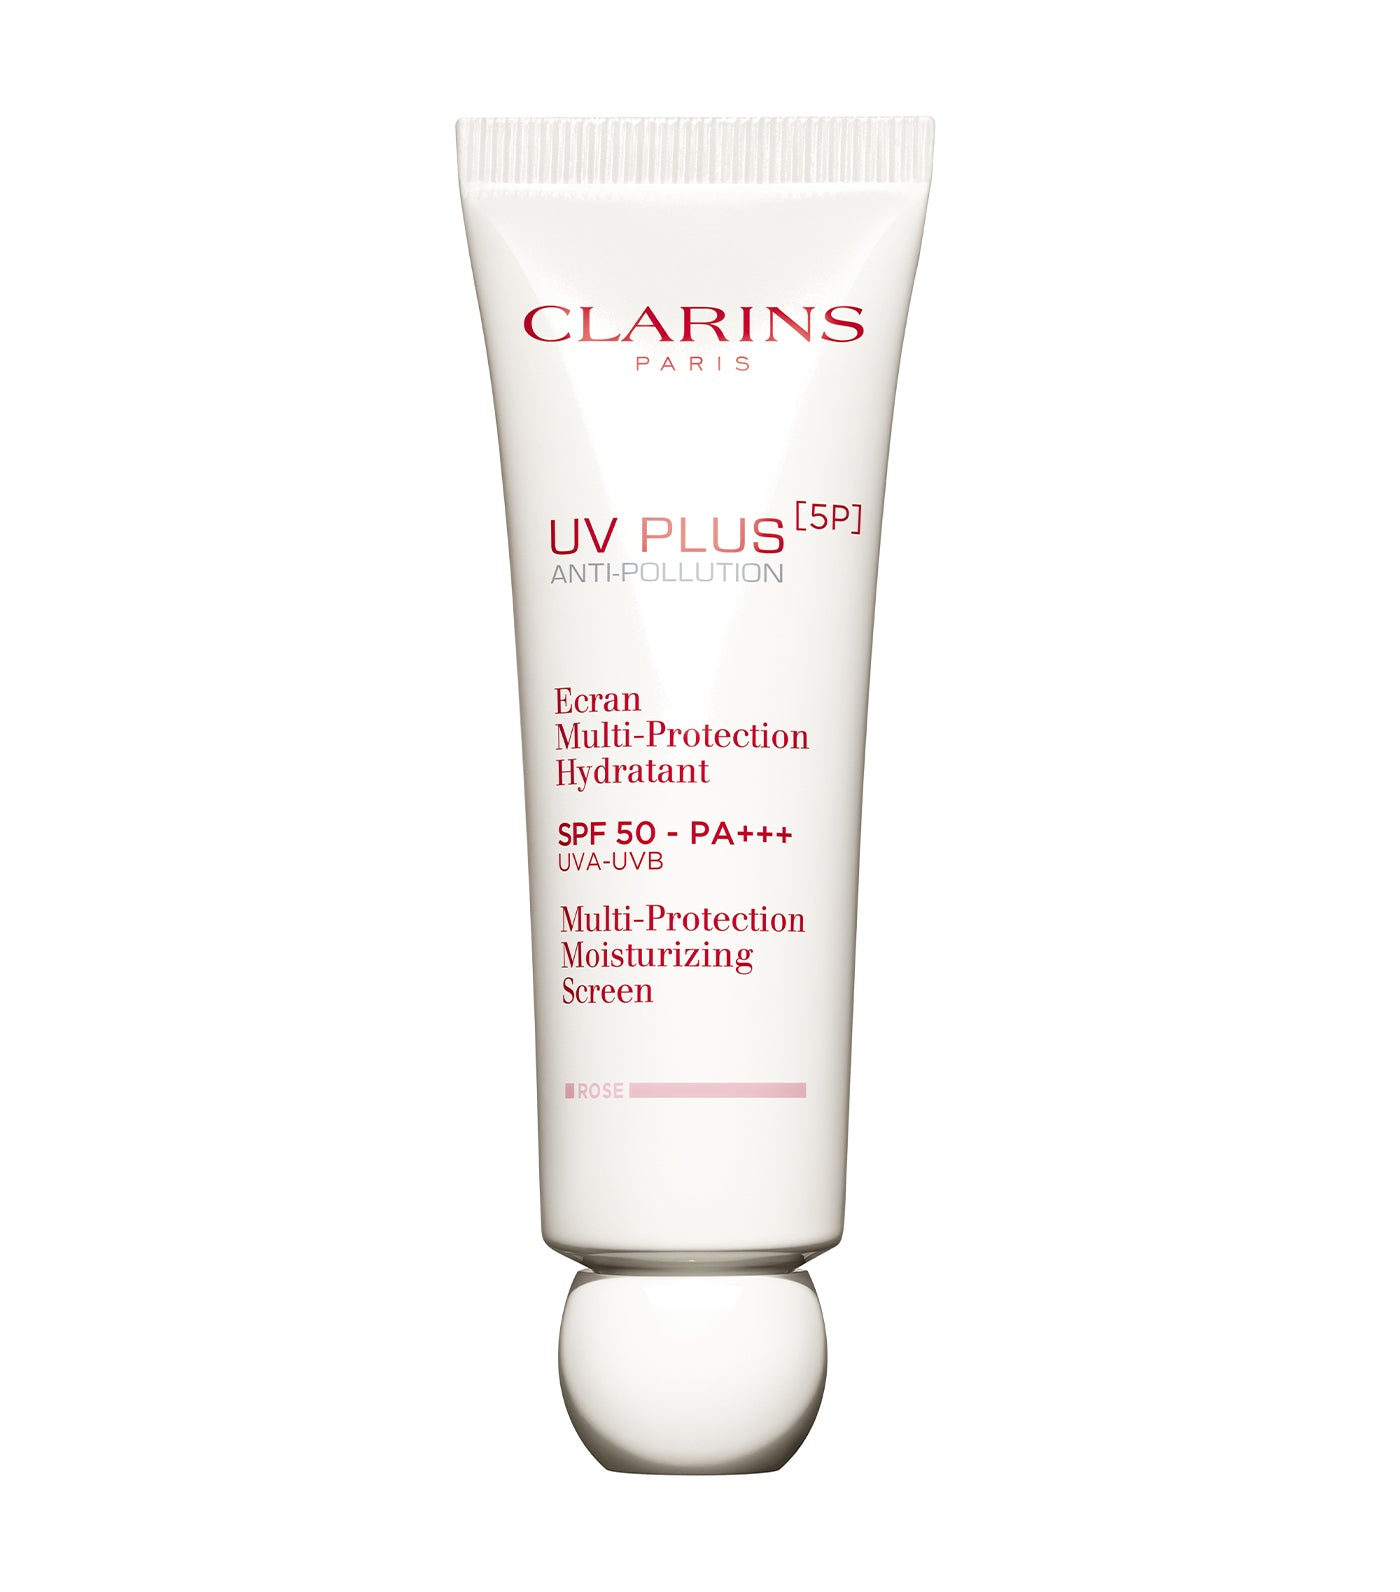 Clarins UV Plus [5P] Anti-Pollution SPF50/PA+++ rose